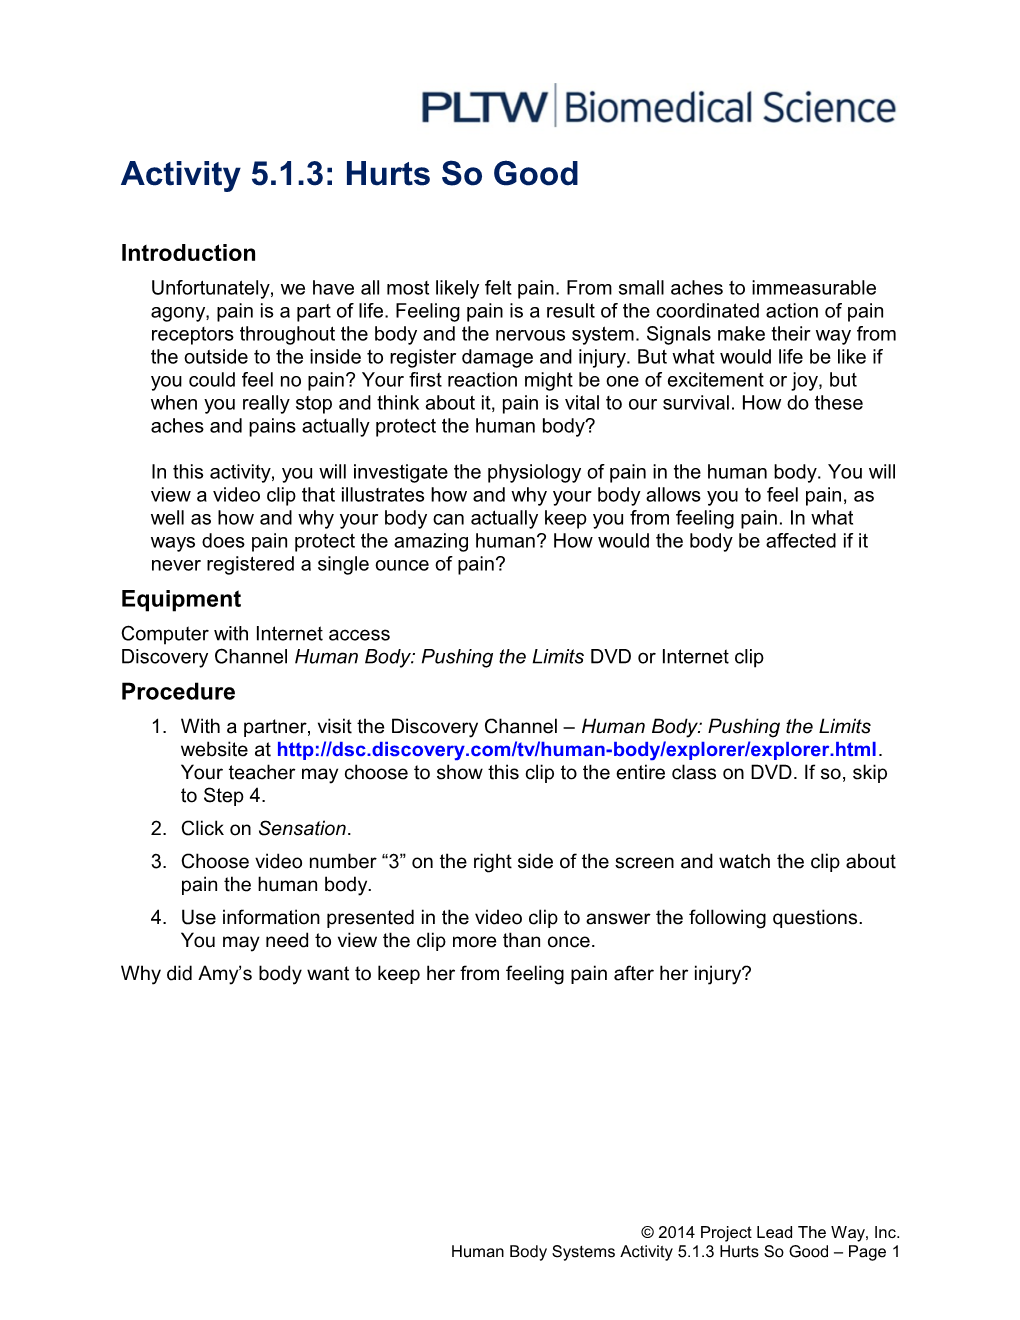 Activity 5.1.3: Hurts So Good